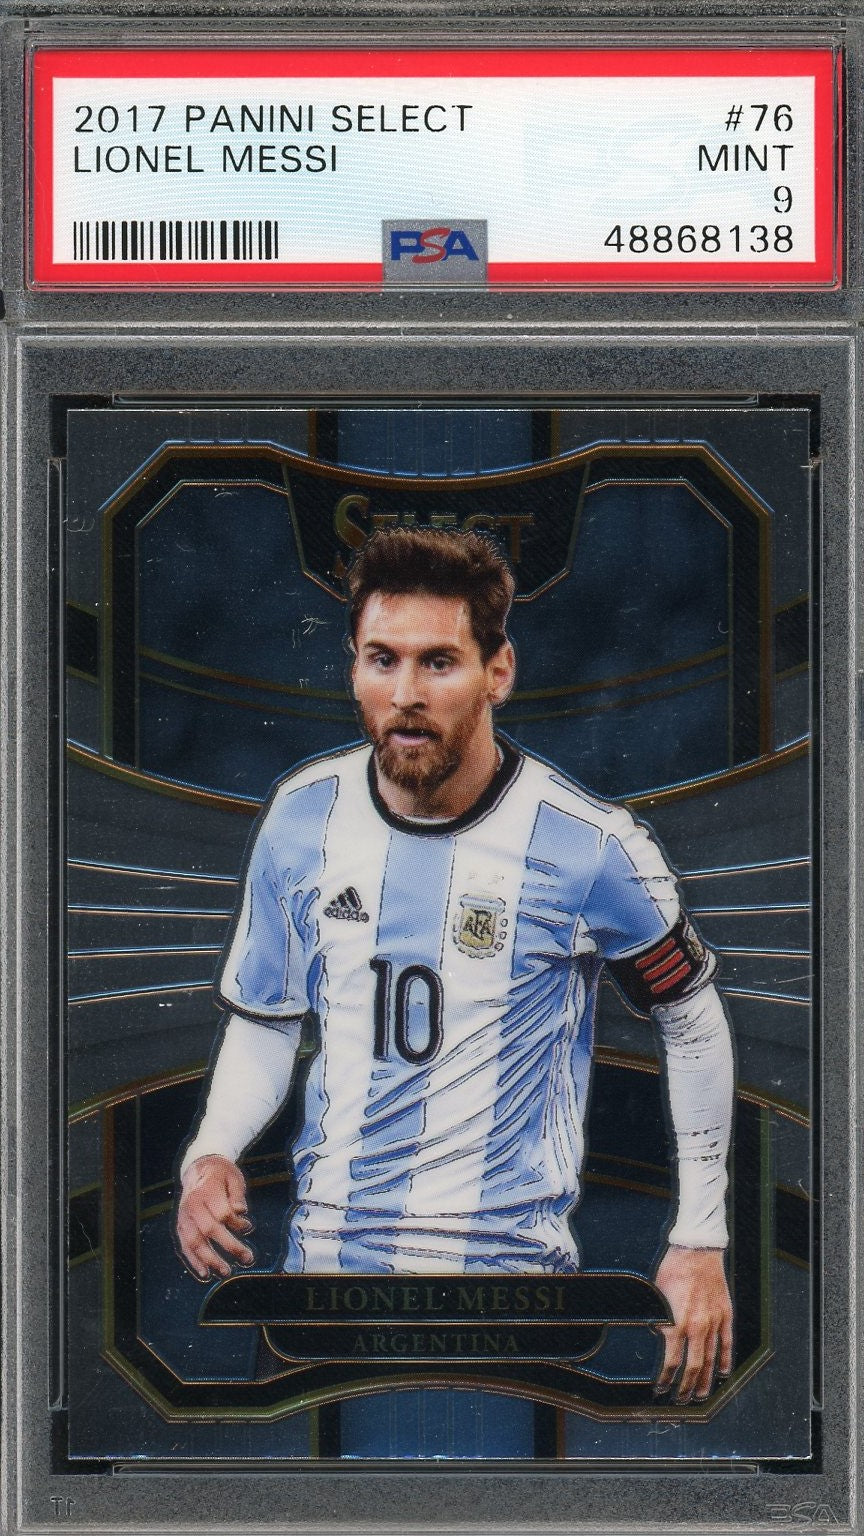 Lionel Messi 2017 Panini Select Soccer Card #76 Graded PSA 9